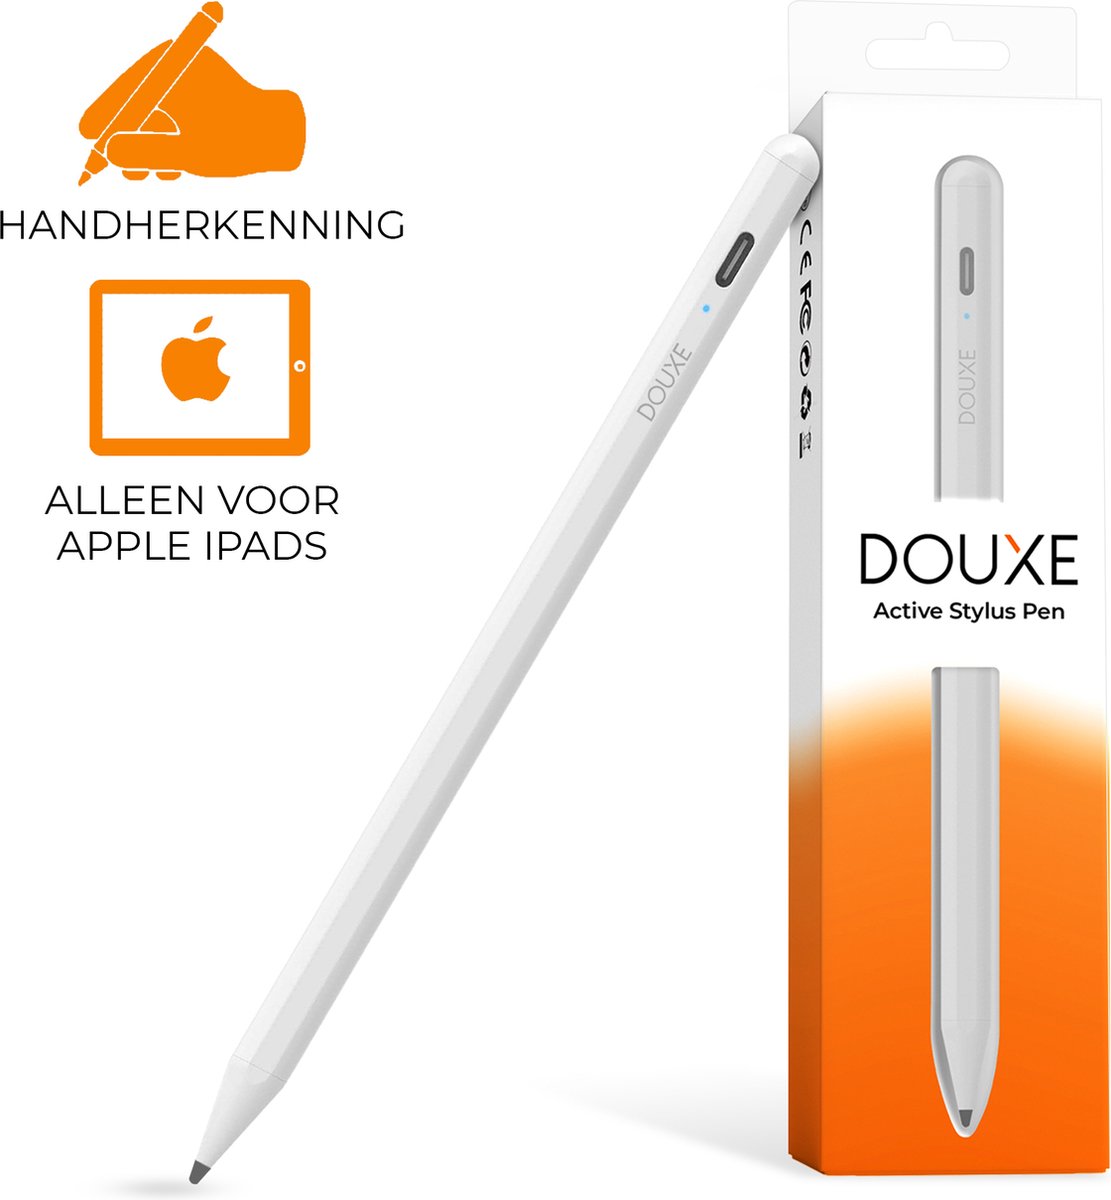 Stylus Pen – Stylus Pen geschikt voor Apple iPads – Touch Control – Handpalm Rejection – Wit – Douxe PS65